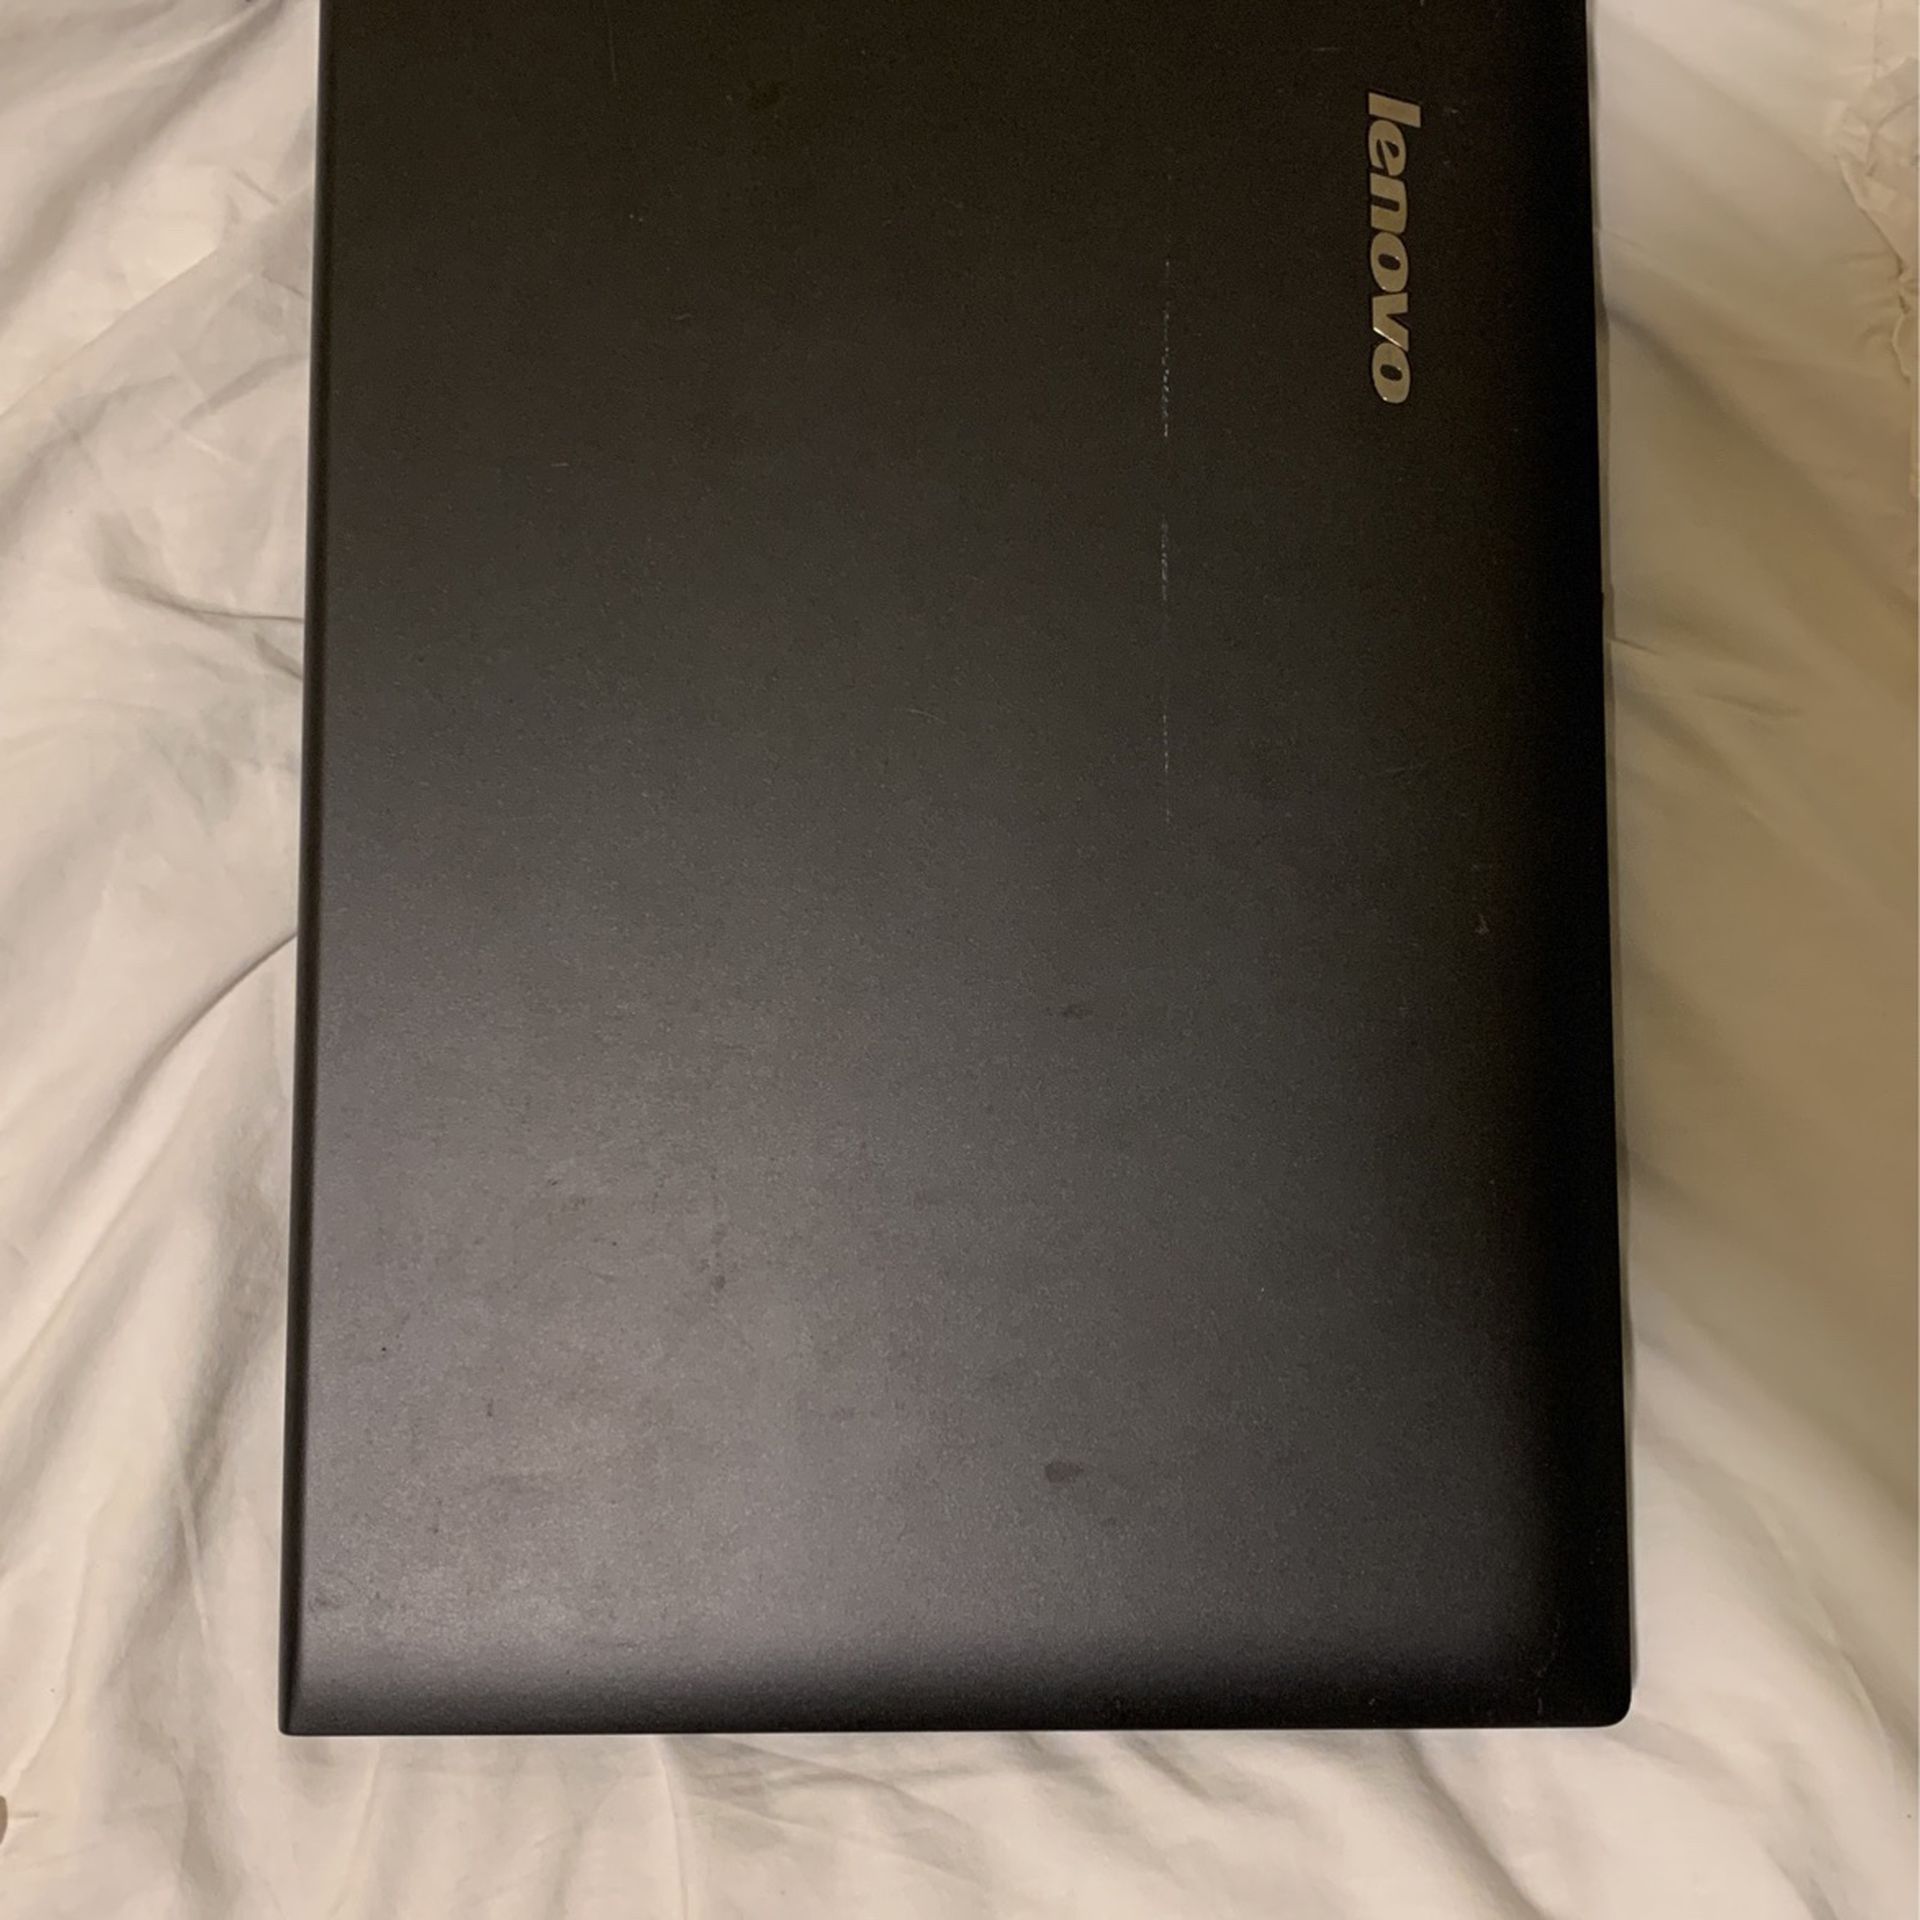 PC Laptop - Lenovo P400 Touch Screen - 6GB RAM